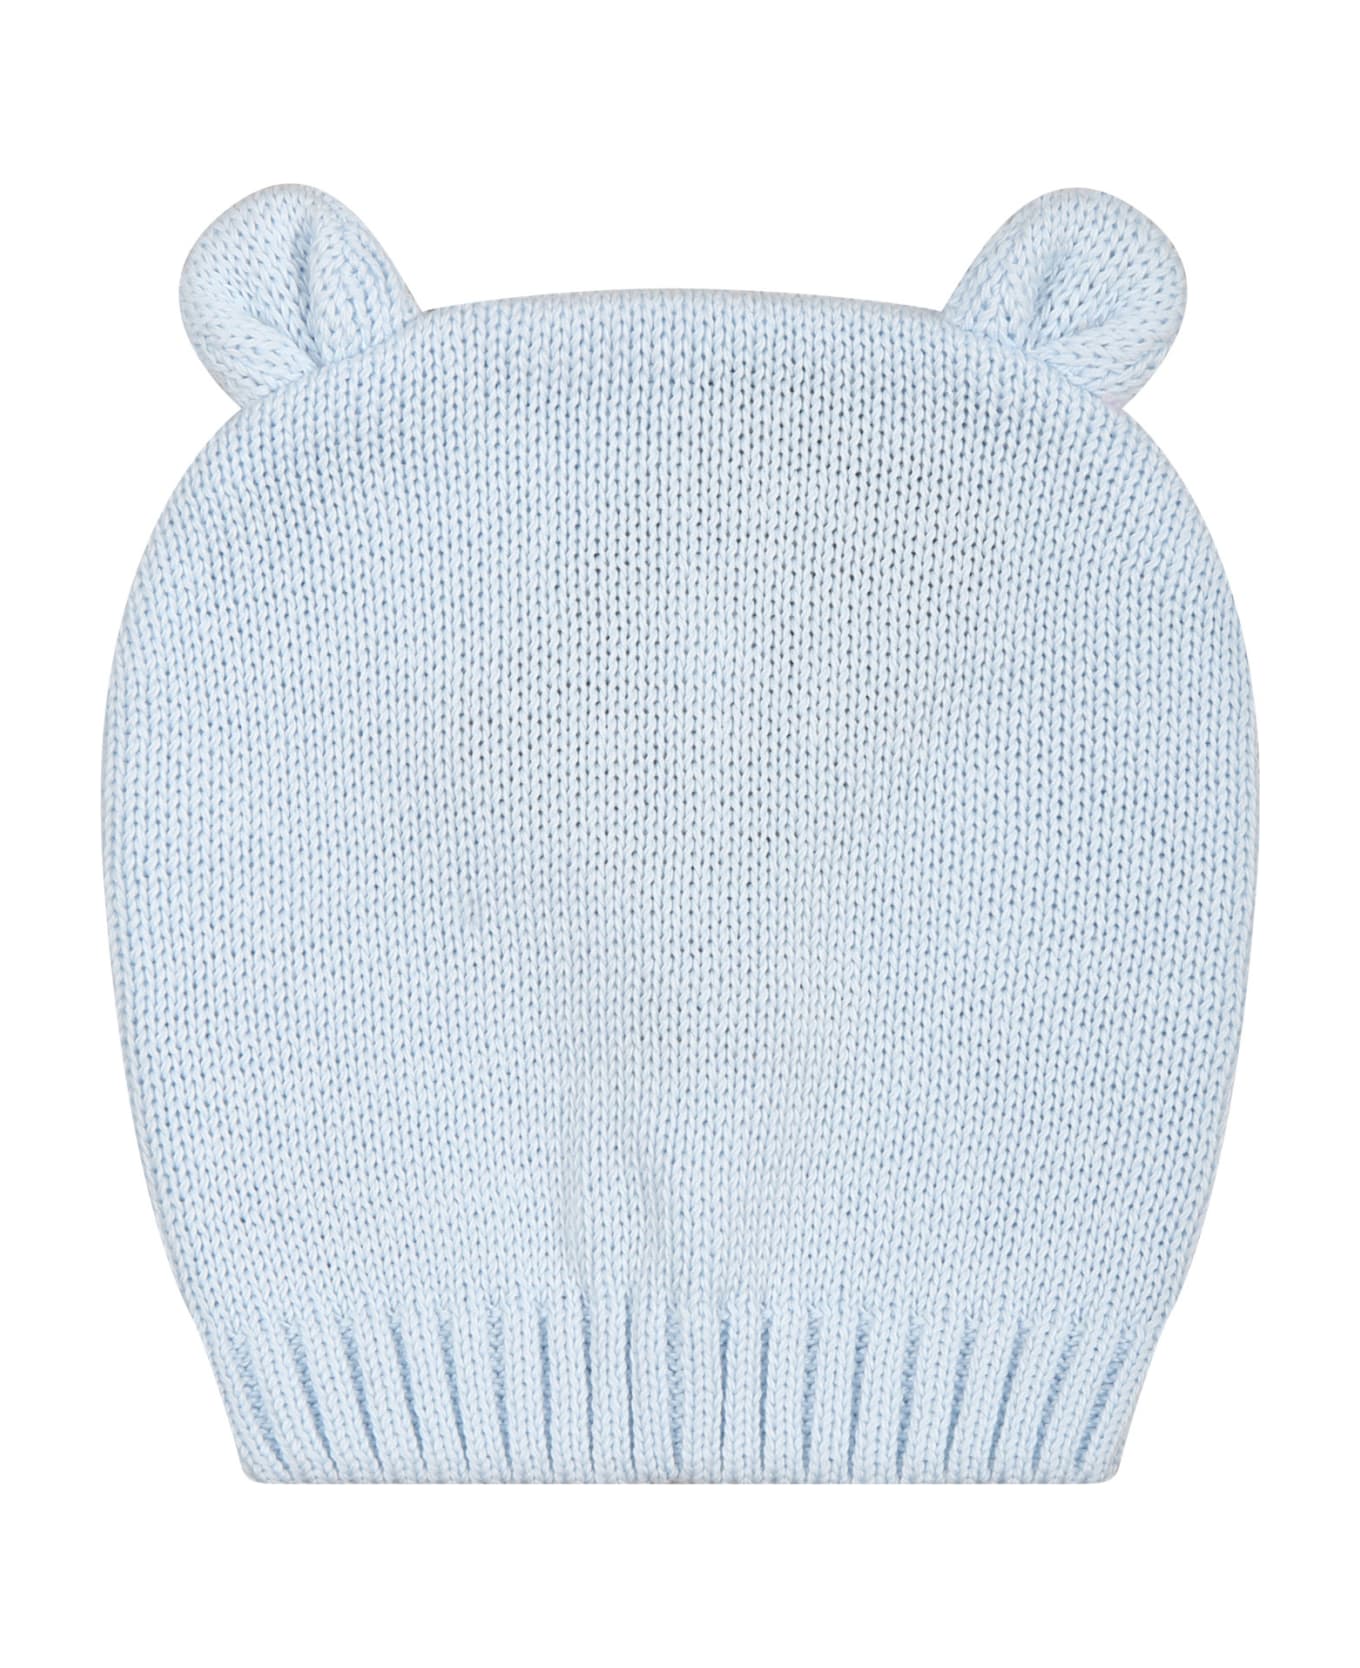 Little Bear Light Blue Hat For Baby Boy - Light Blue